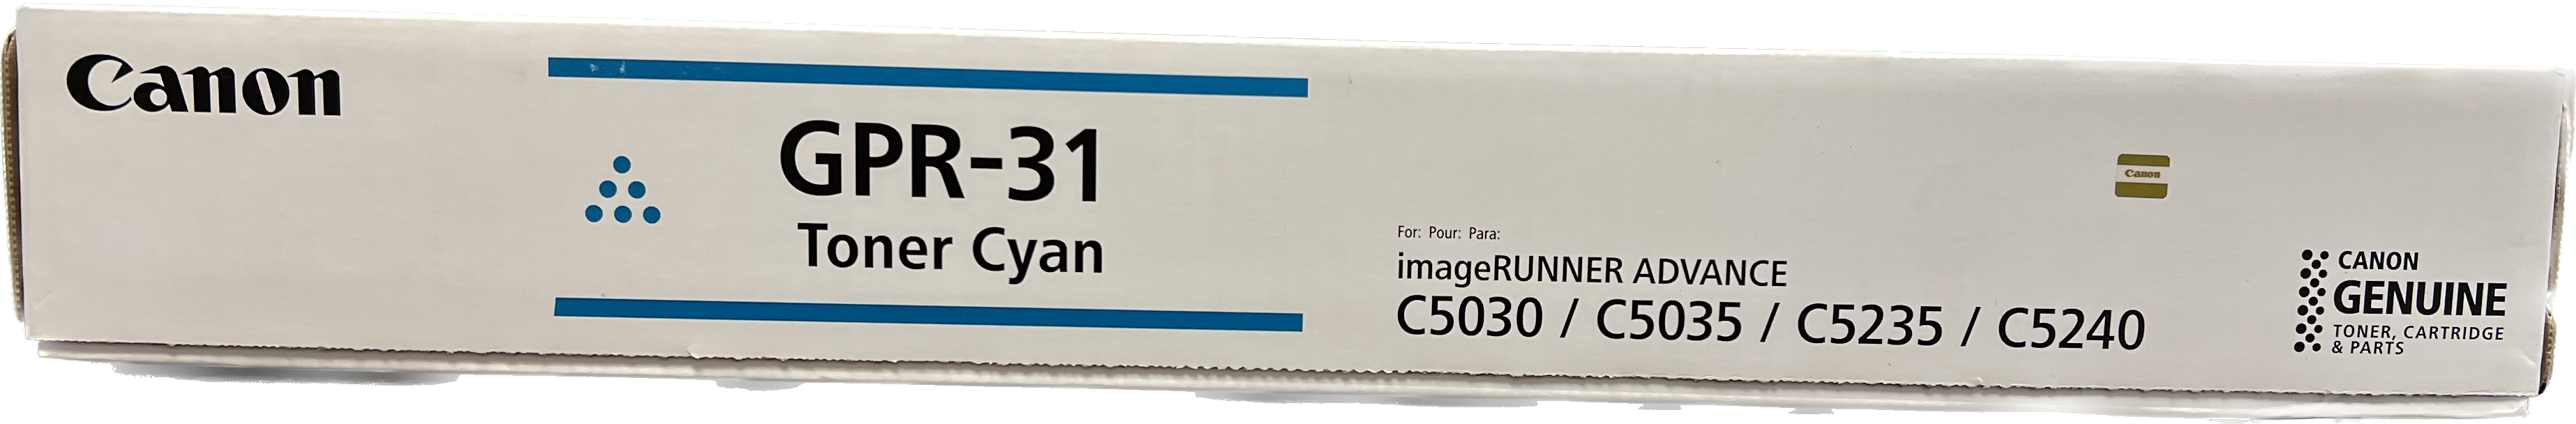 Genuine Canon Cyan Toner Cartridge | 2794B003 | GPR-31C